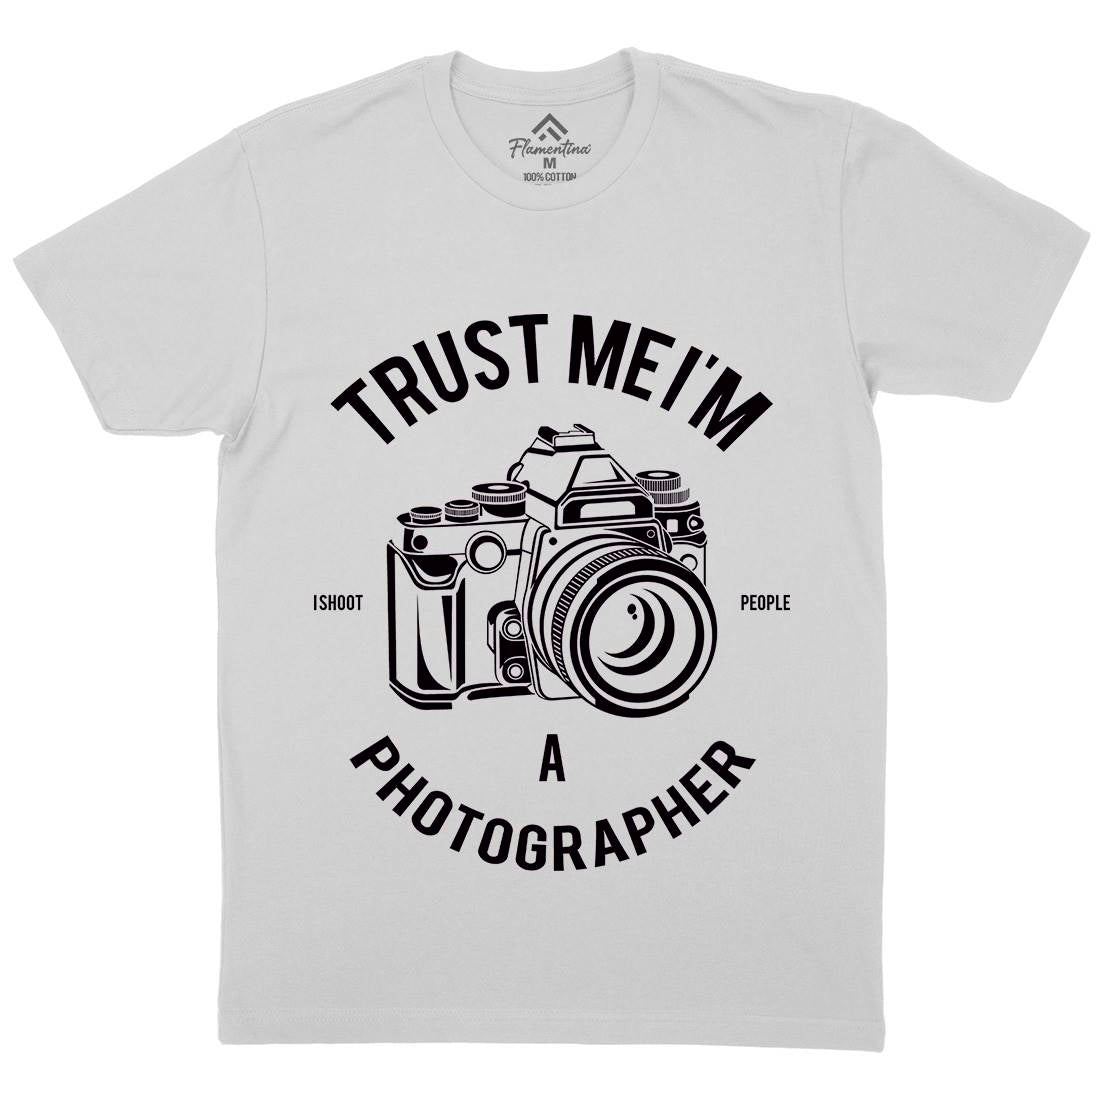 Photographer Mens Crew Neck T-Shirt Media A110